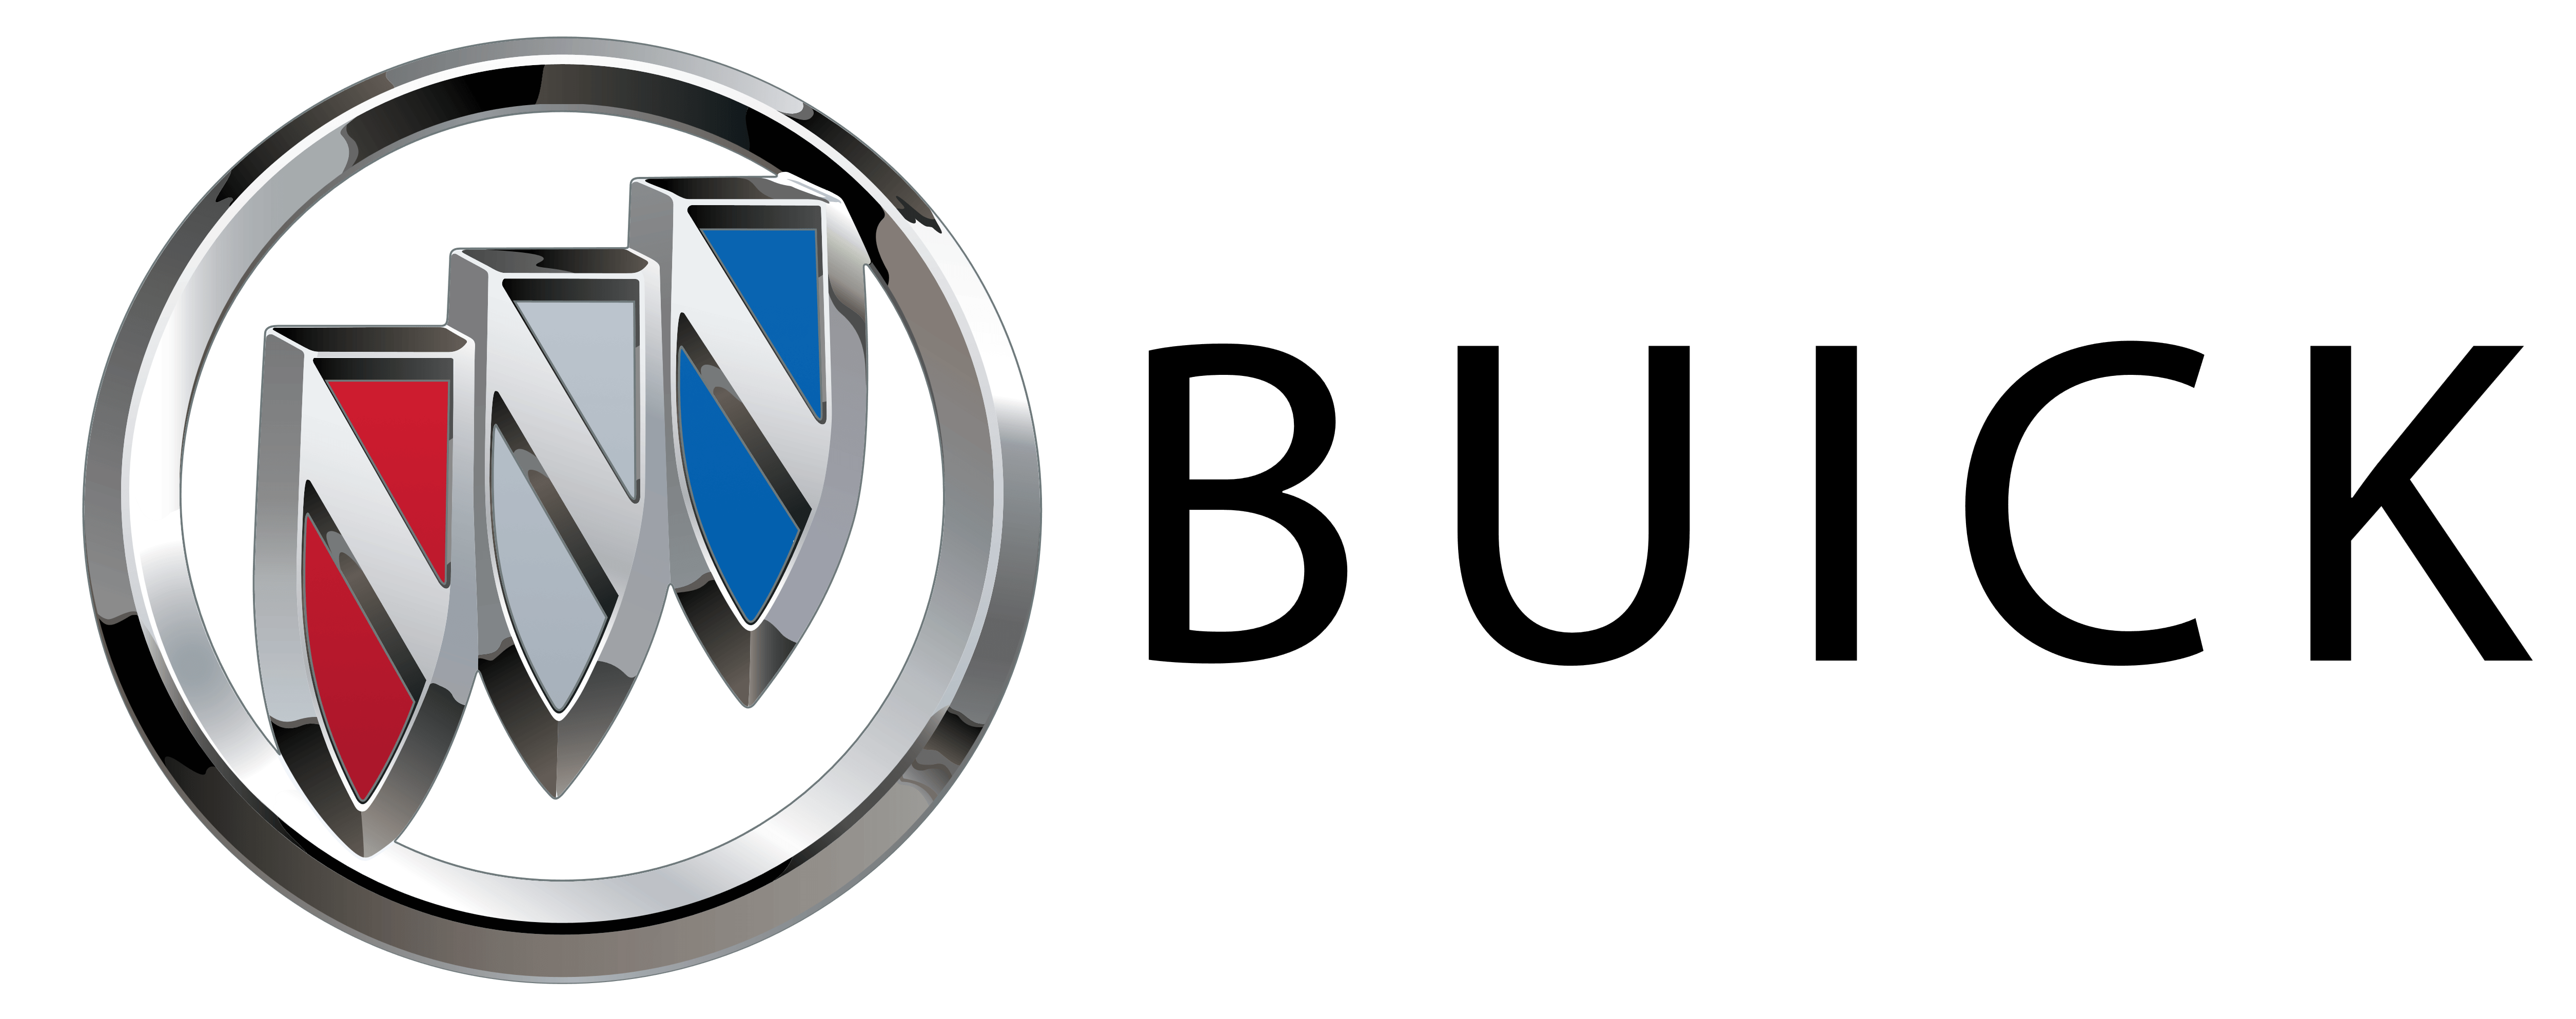 Buik Logo - Buick – Logos Download